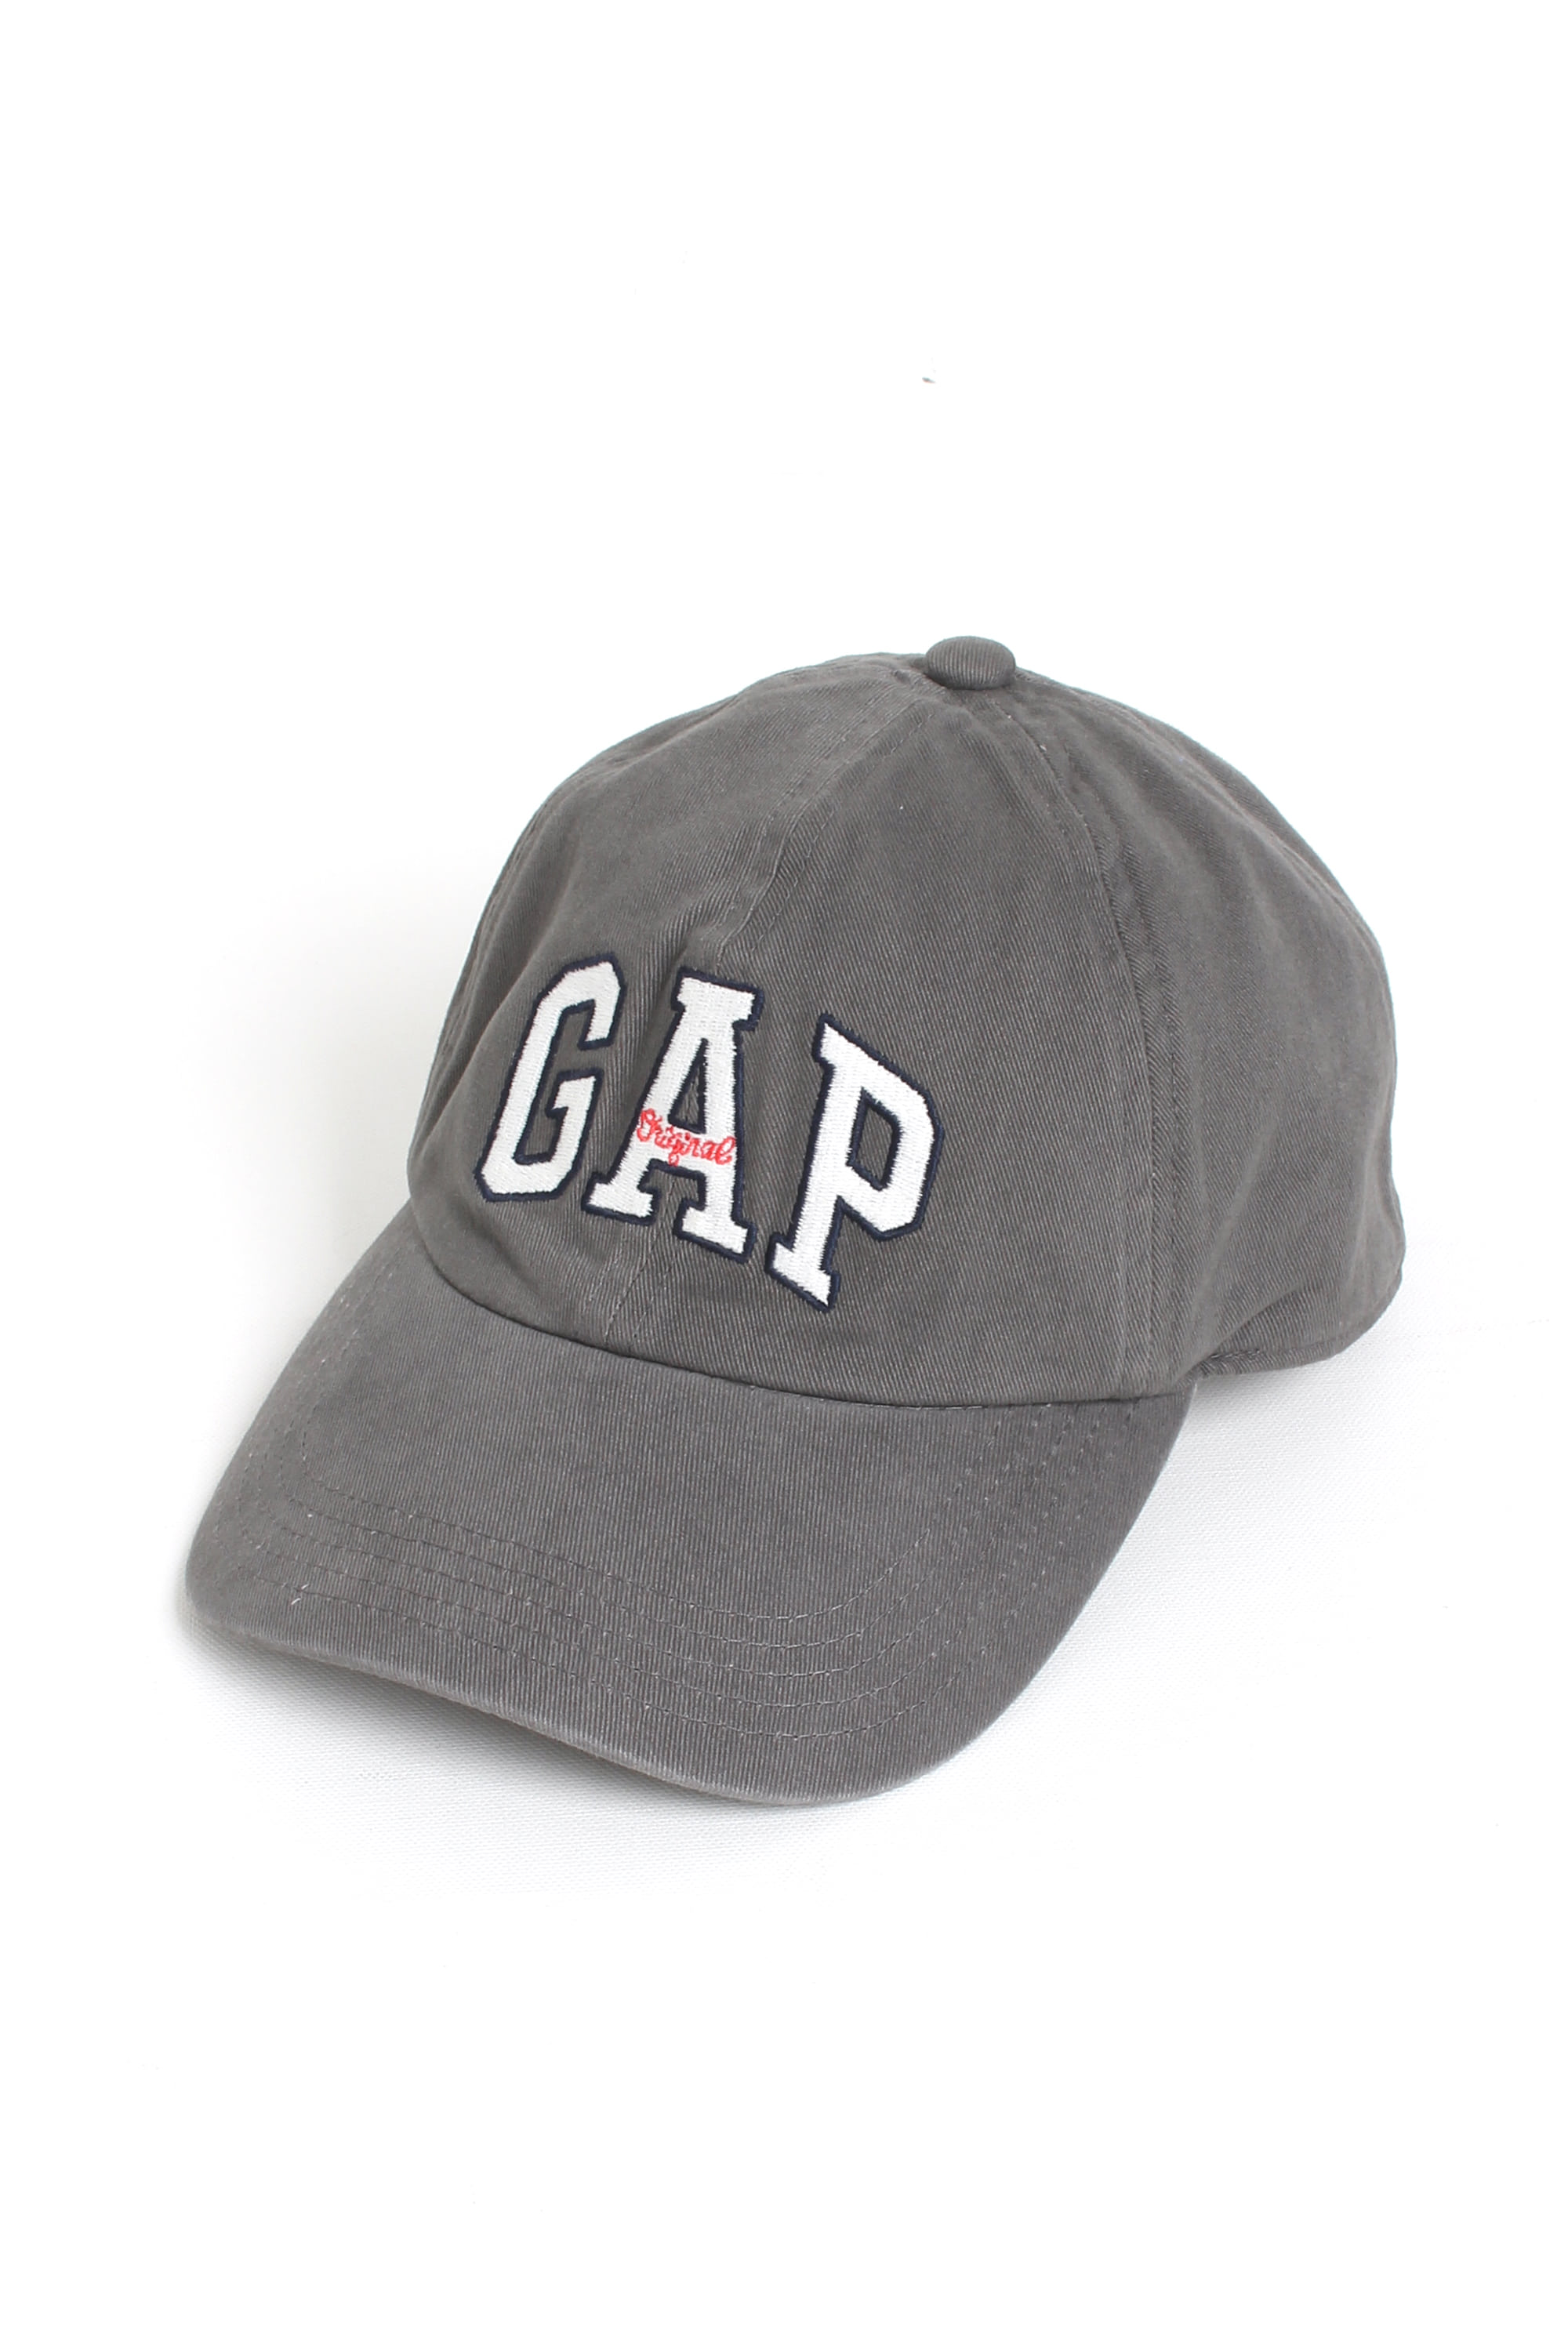 Vintage GAP Ball cap(FREE)